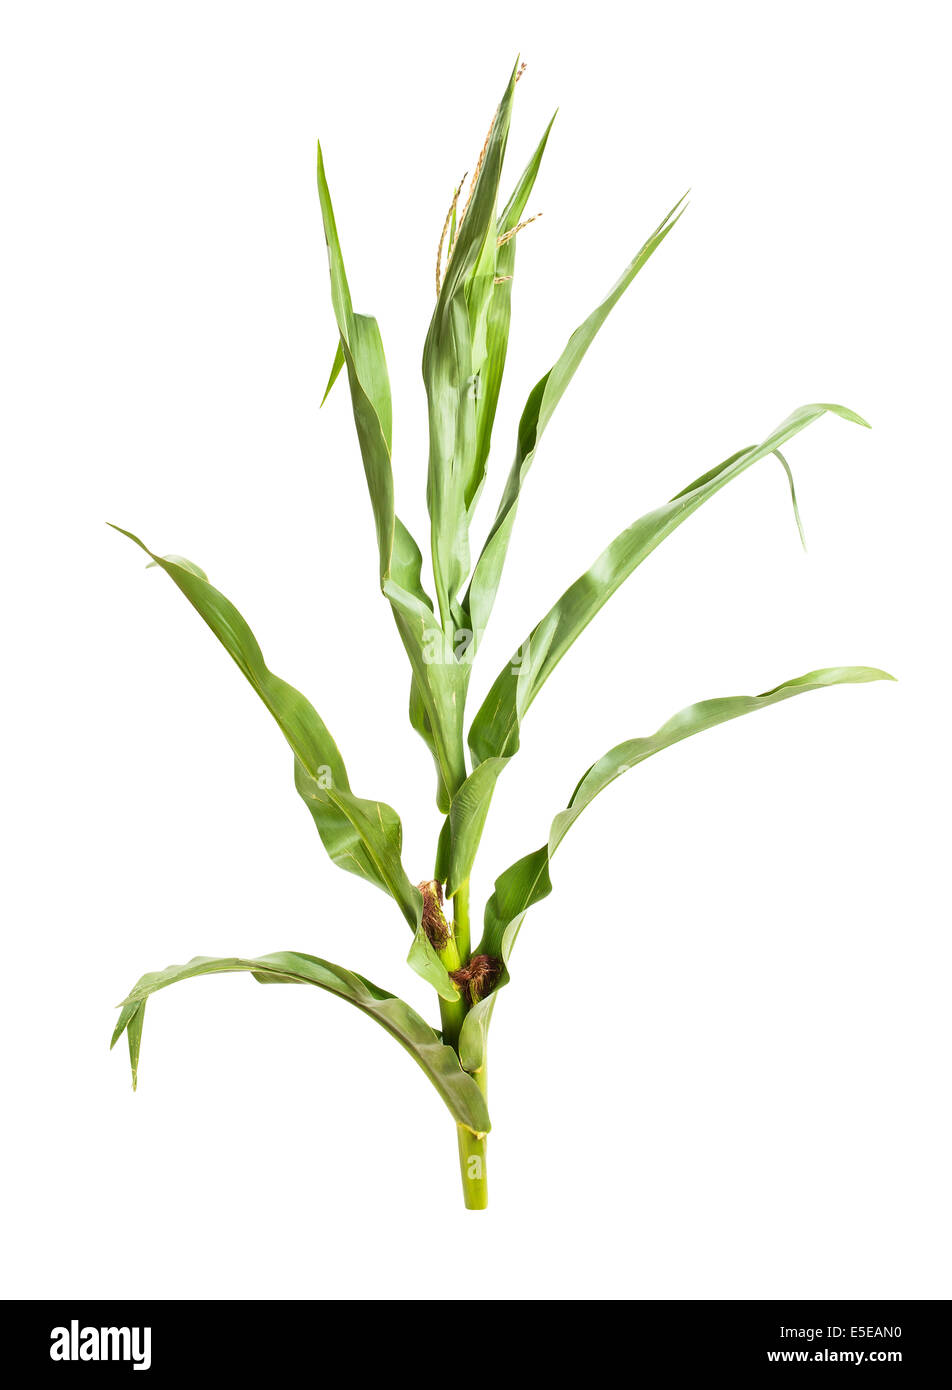 corn plant isolated Stock Photo